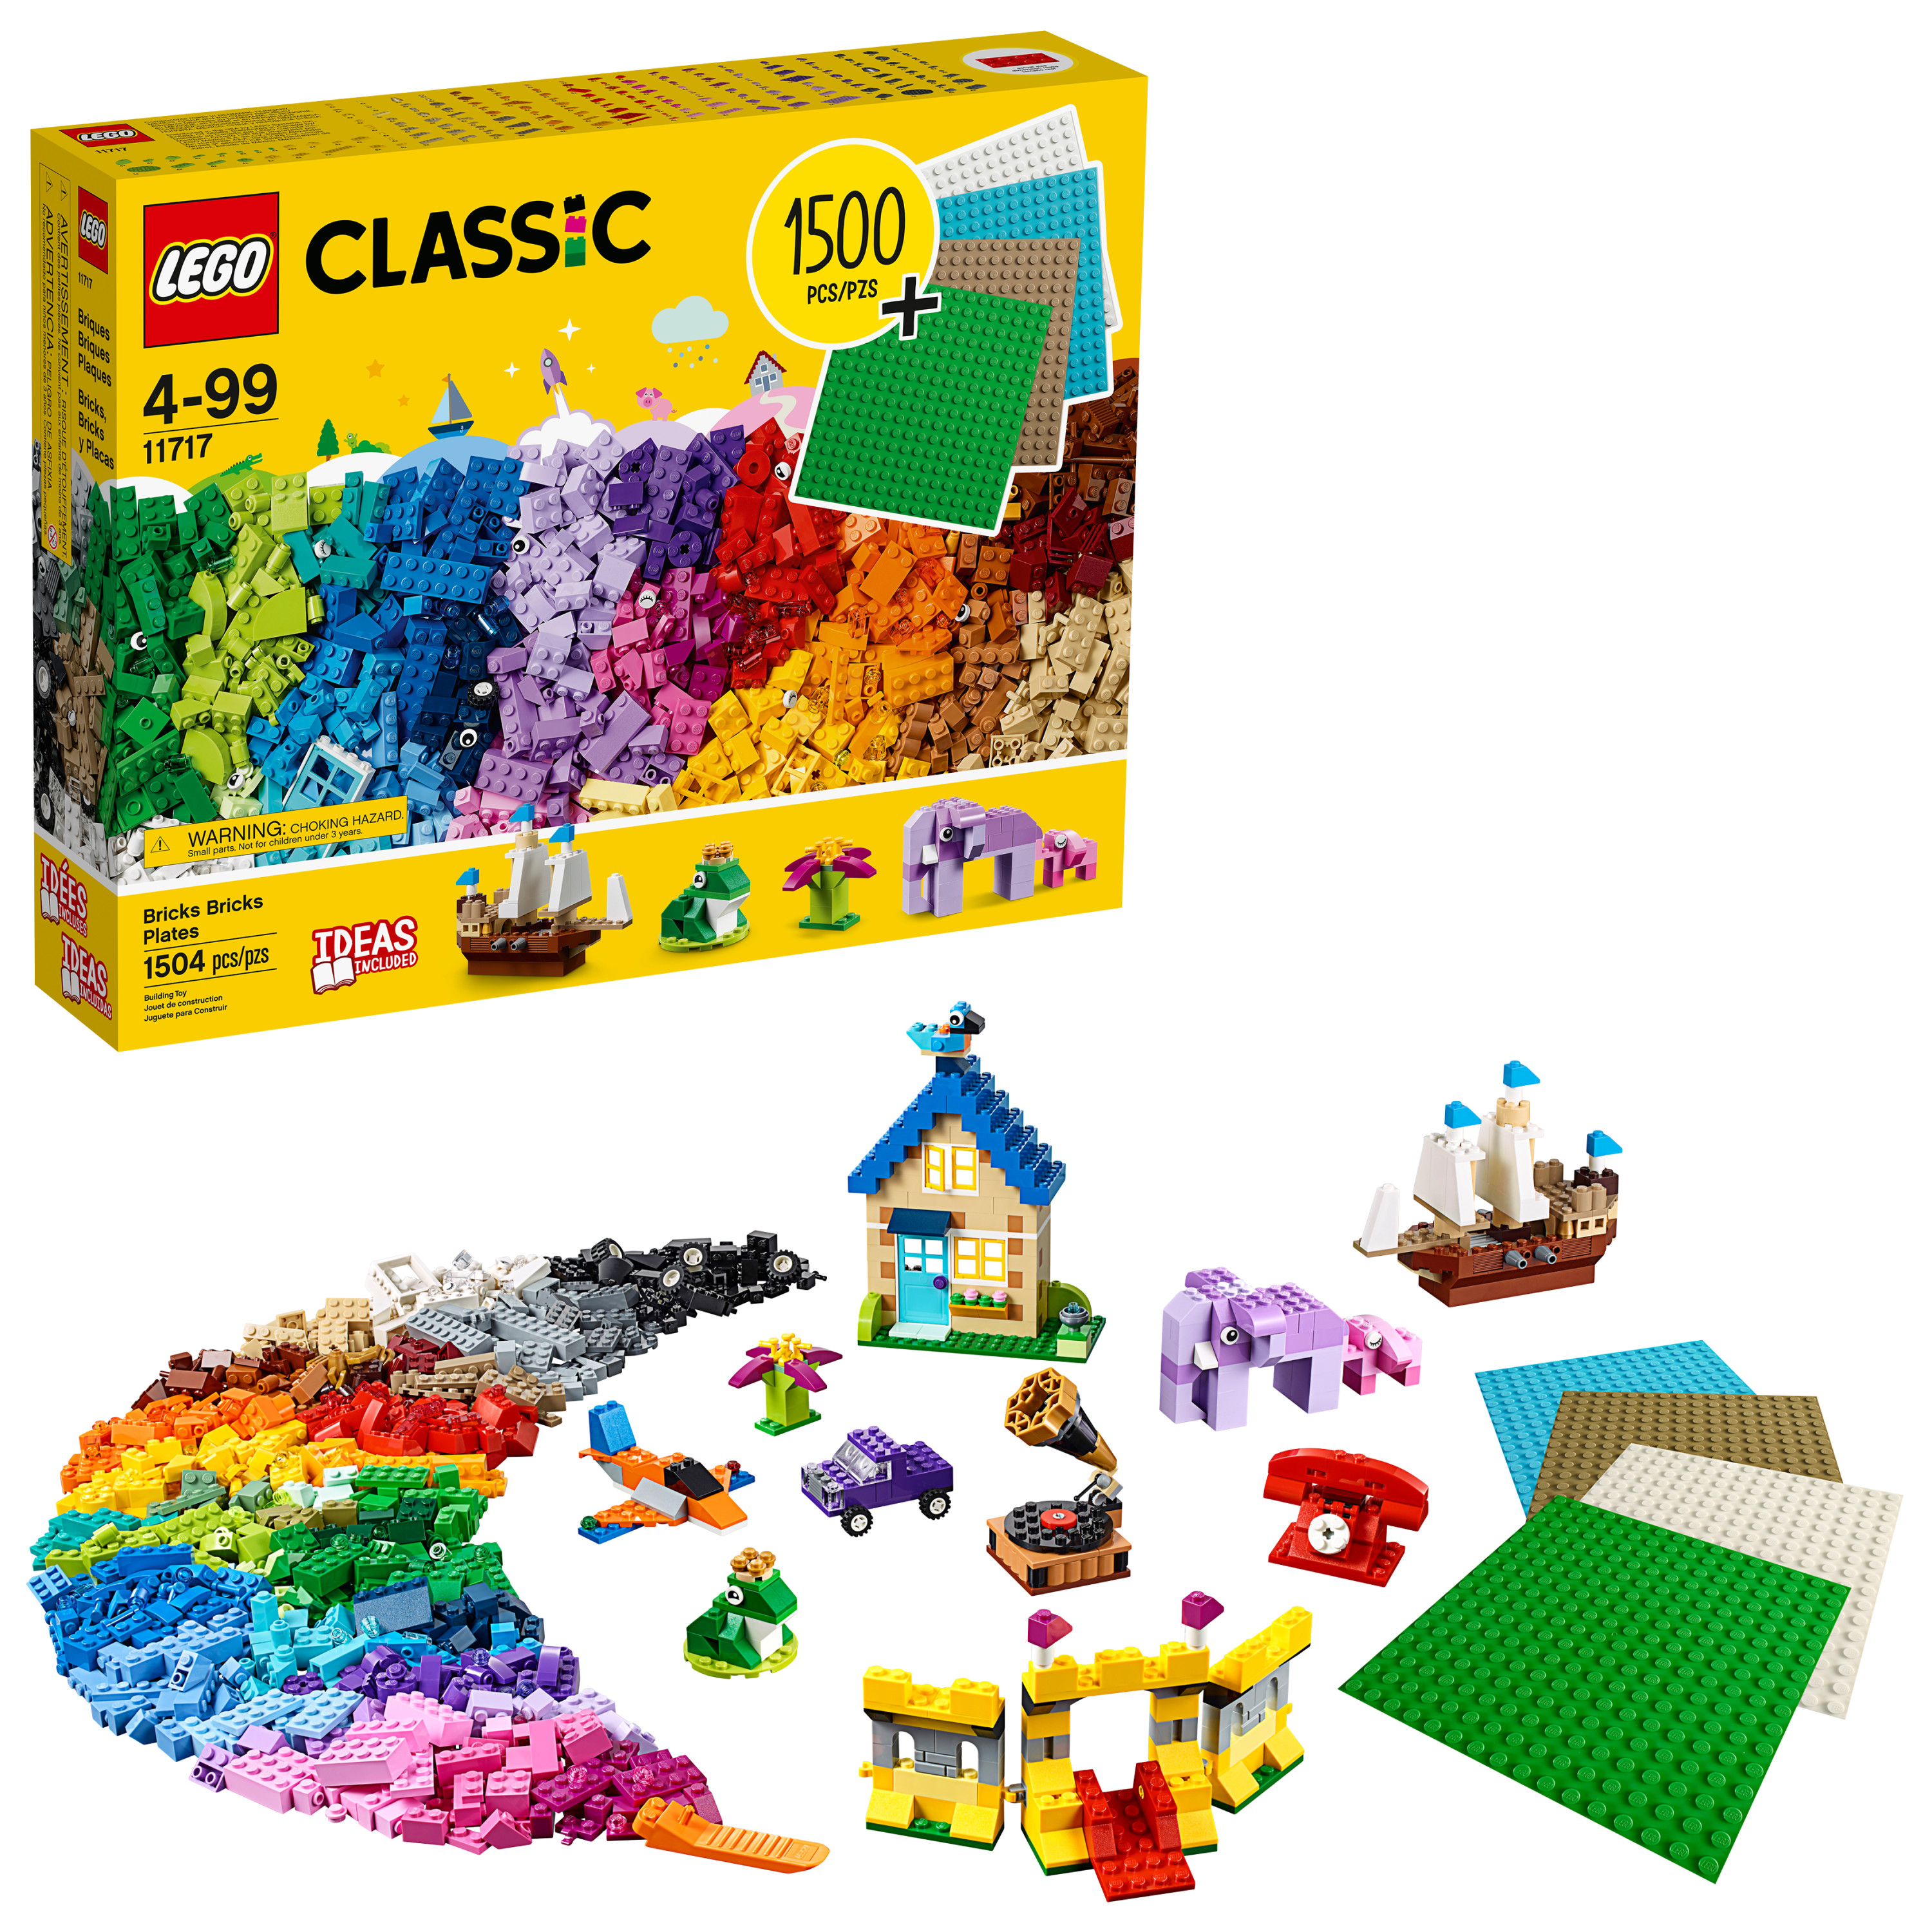 LEGO Classic Bricks Bricks Plates 11717 Building Toy (1504 Pieces) $49.97